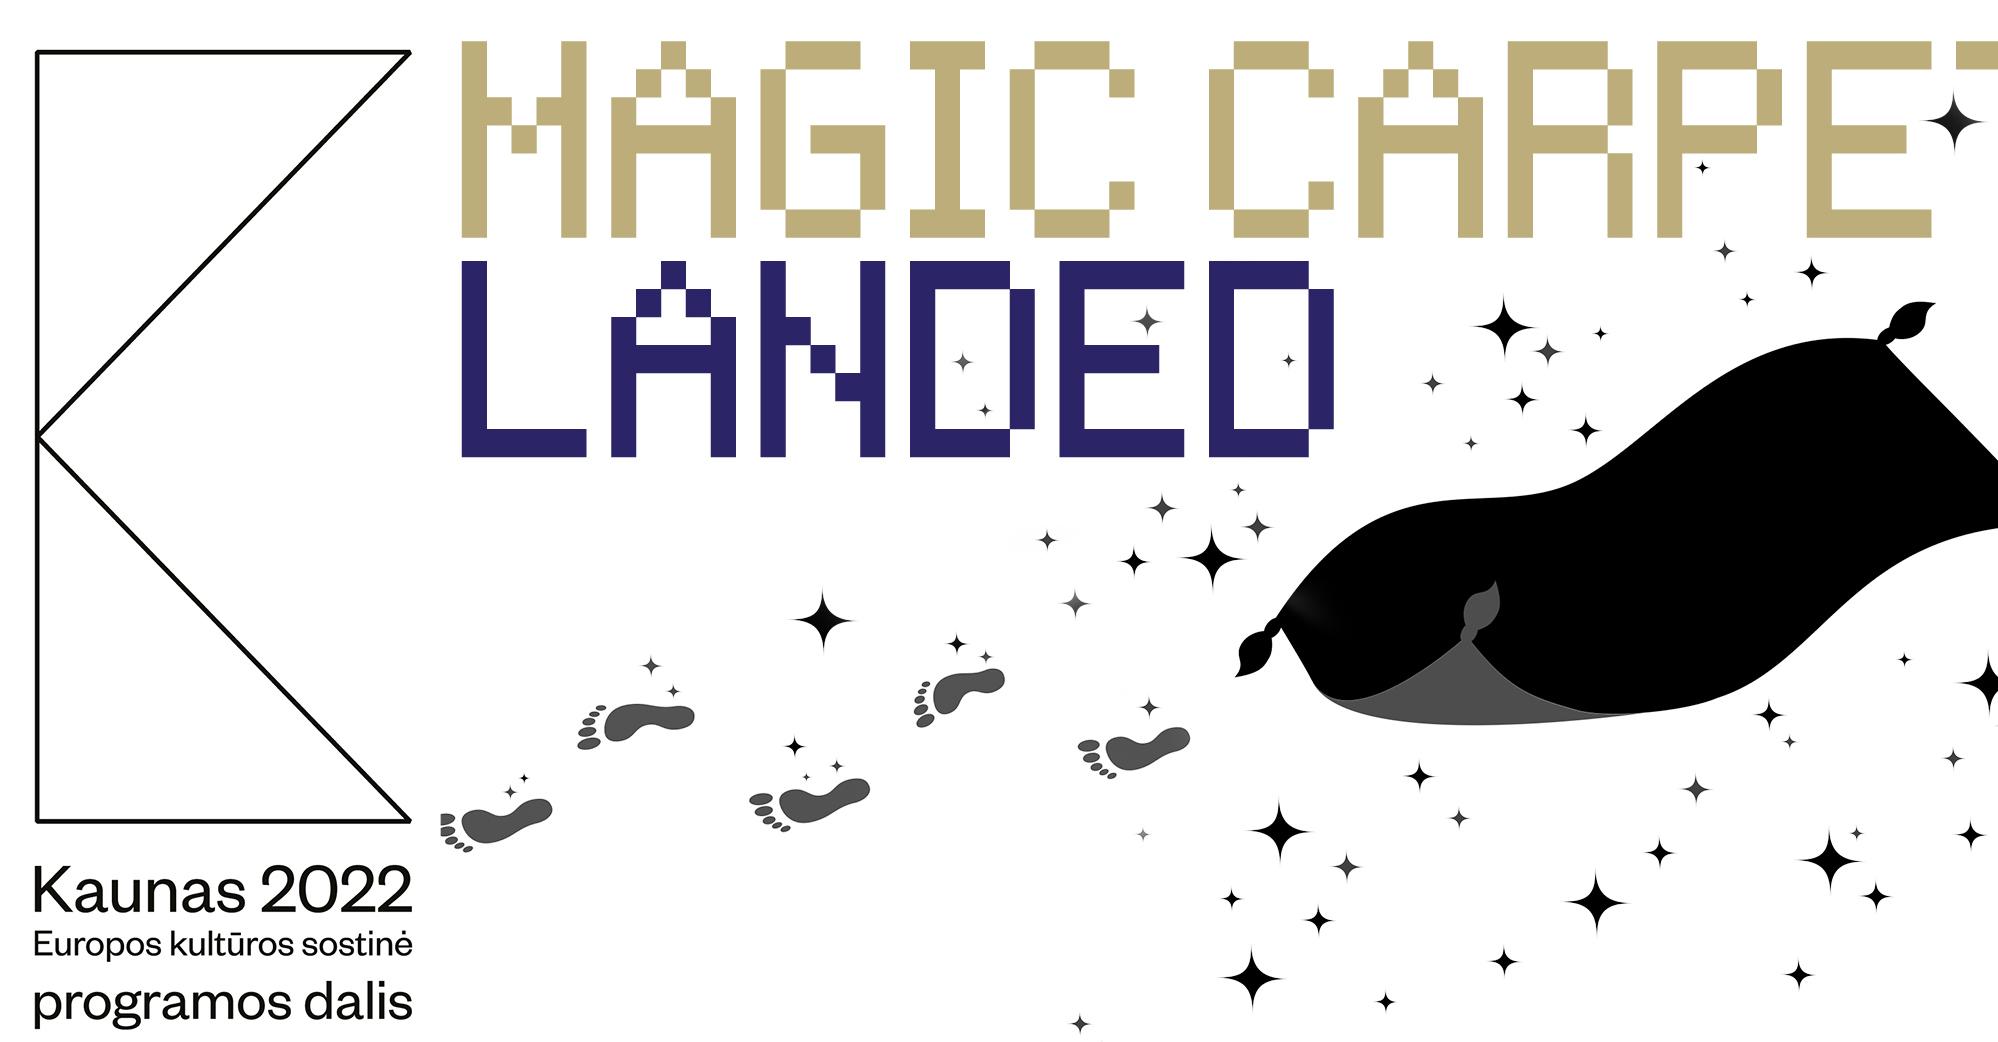 MagiC Carpets Landed: teatralizuota ekskursija